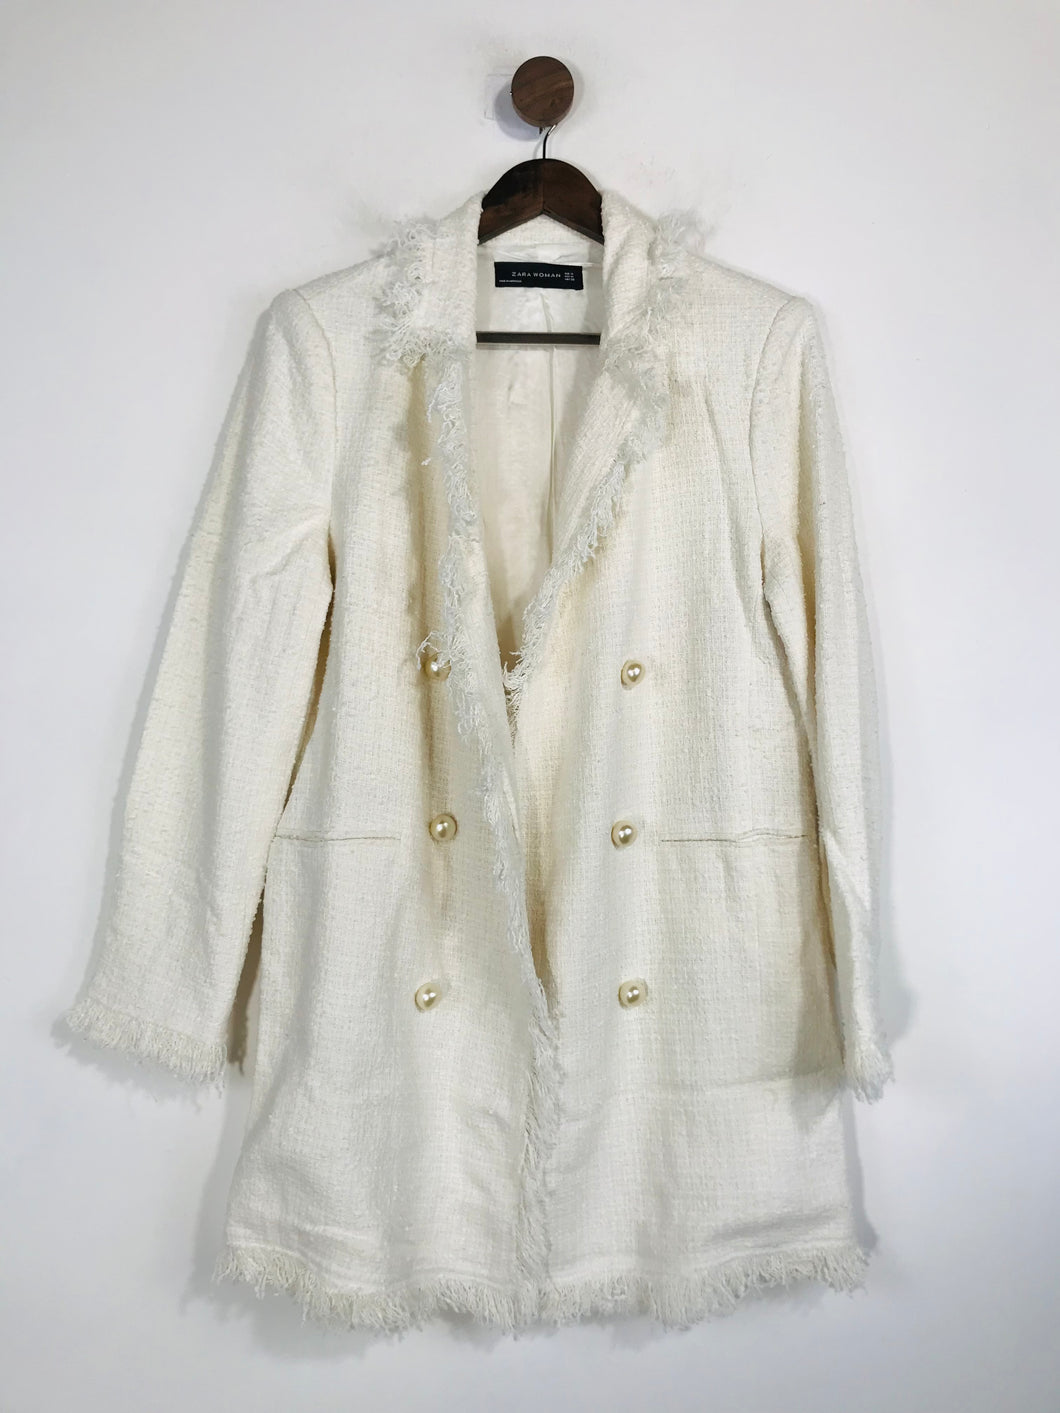 Zara Women's Tweed Overcoat Coat | M UK10-12 | White